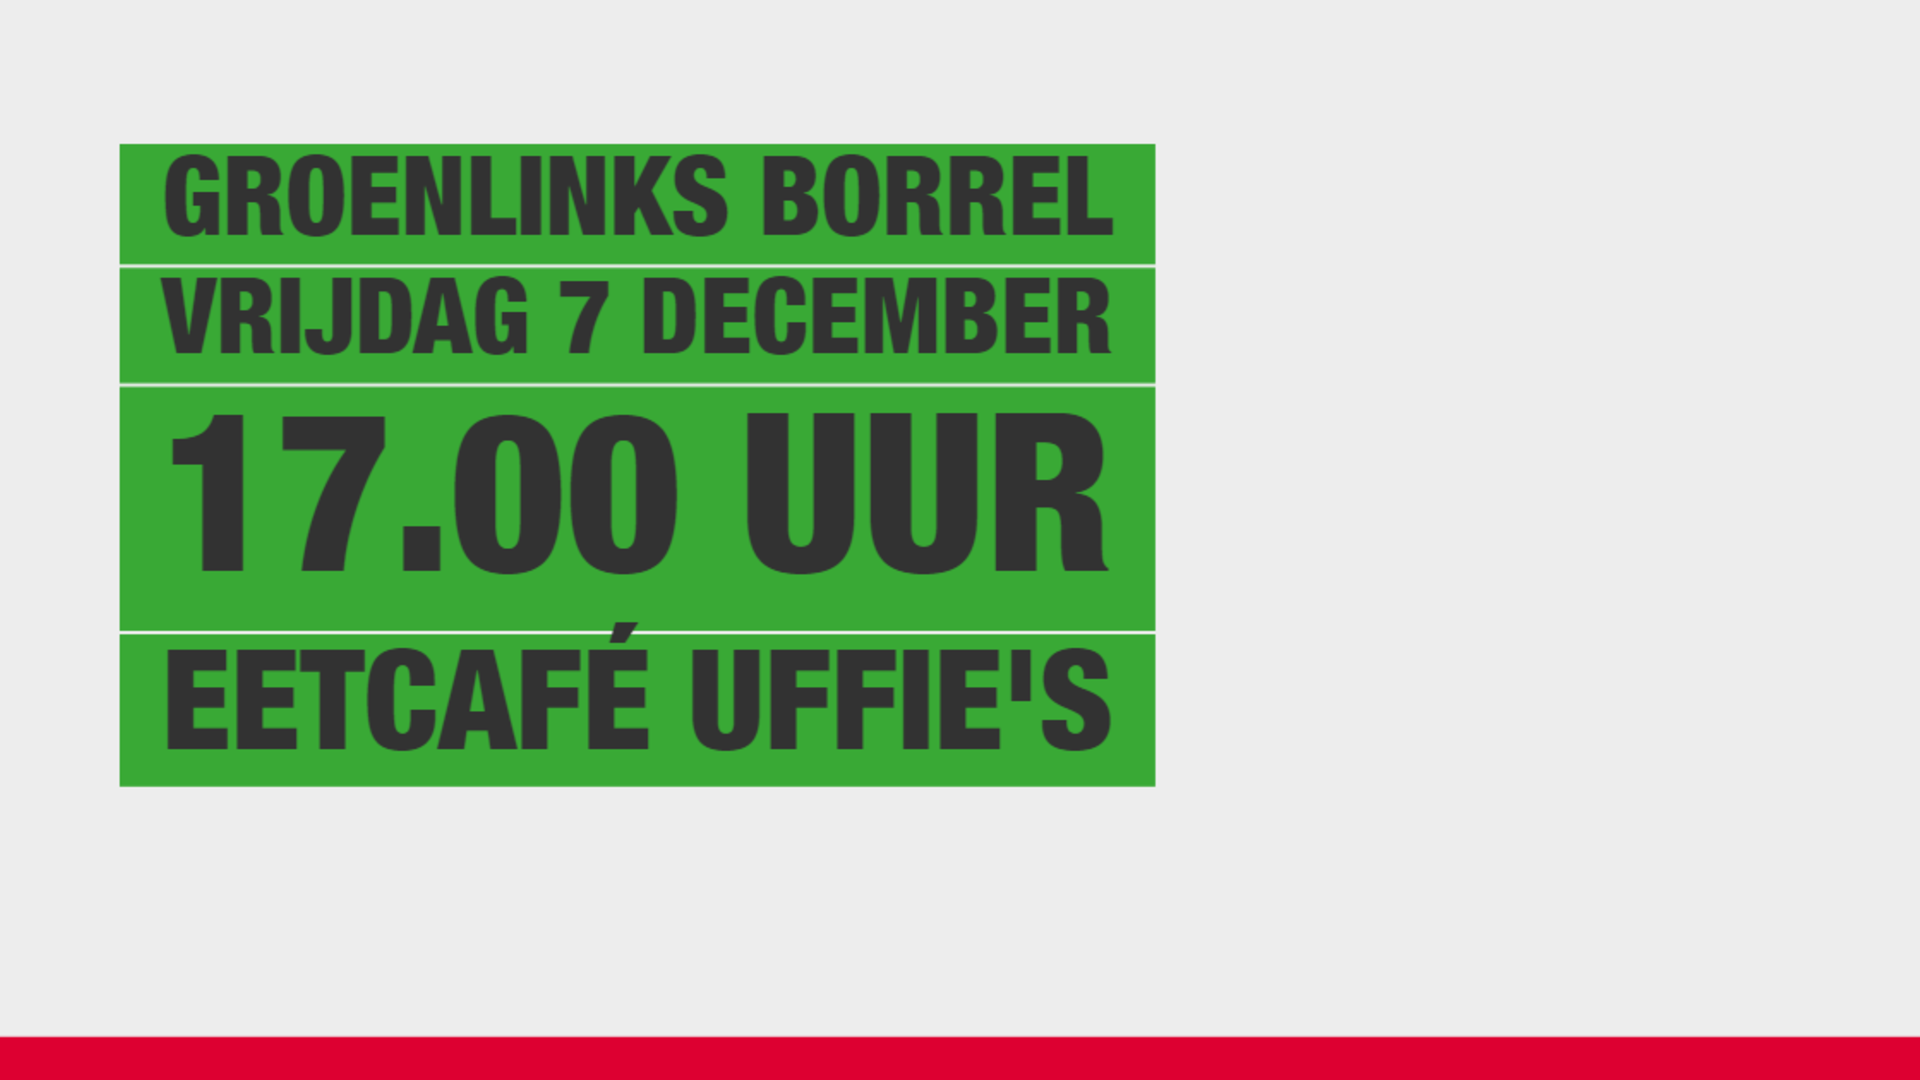 GroenLinks borrel 7 december